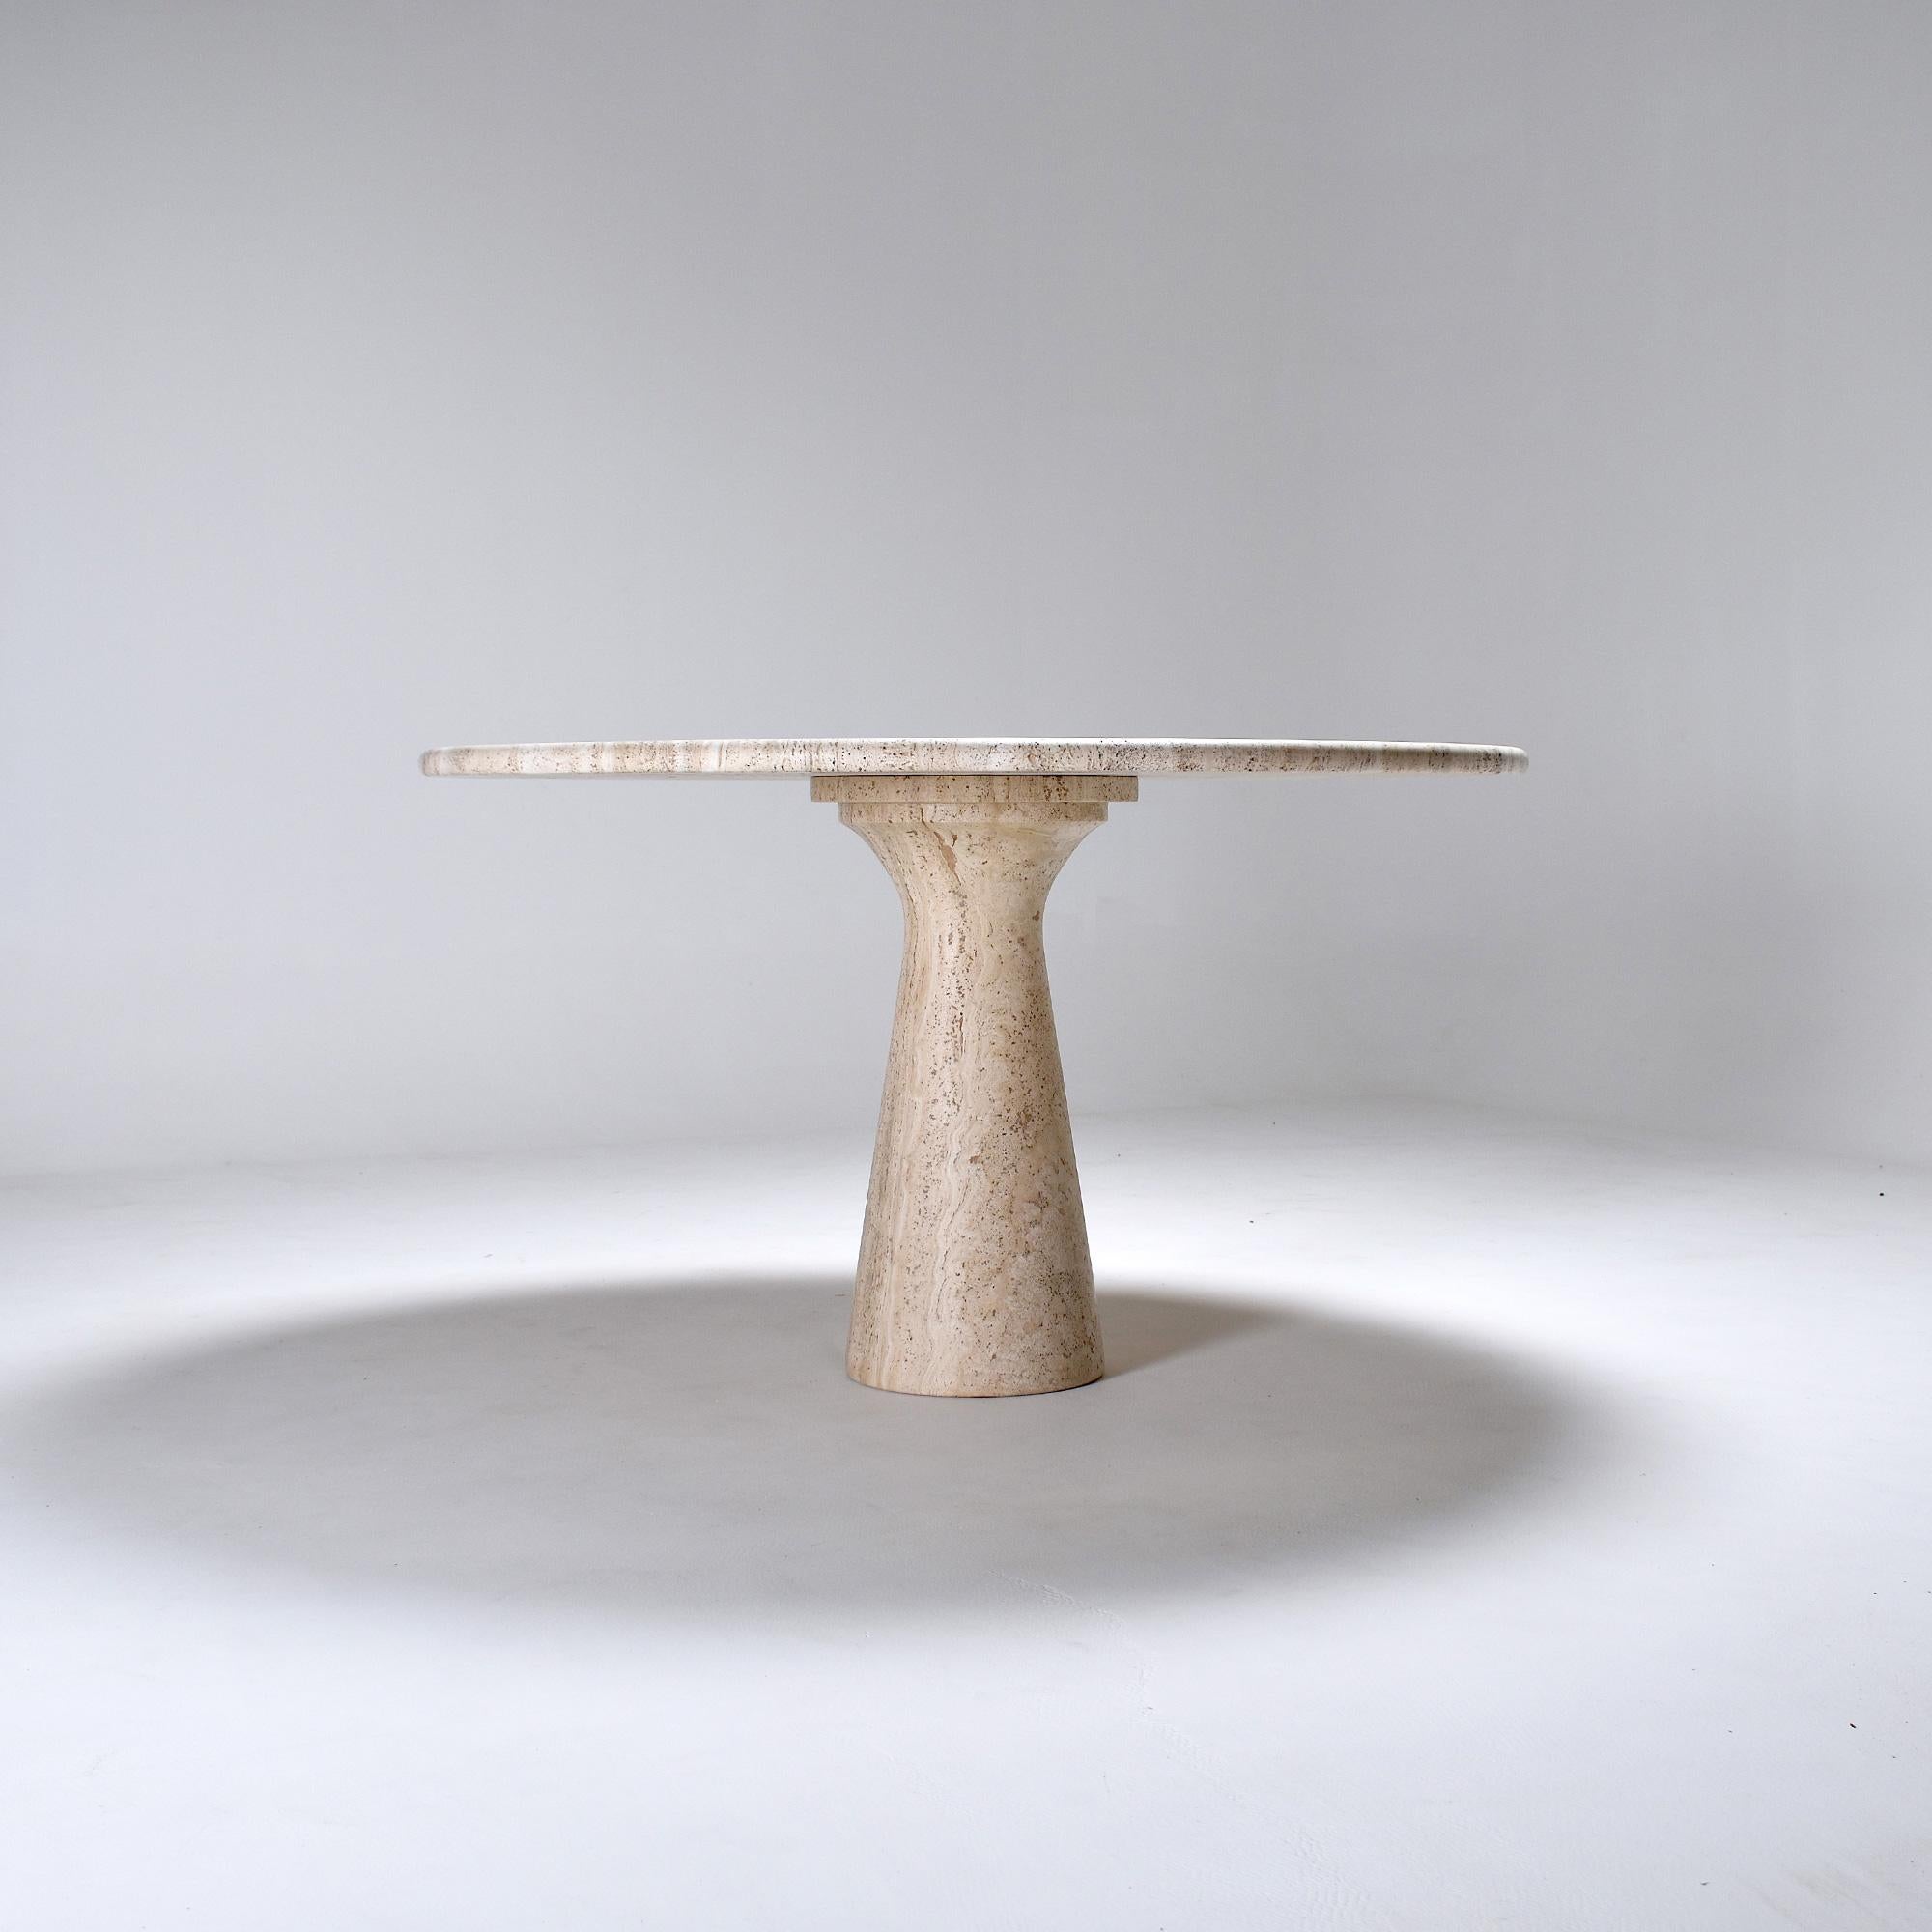 Italian Round Travertine Pedestal Dining Table